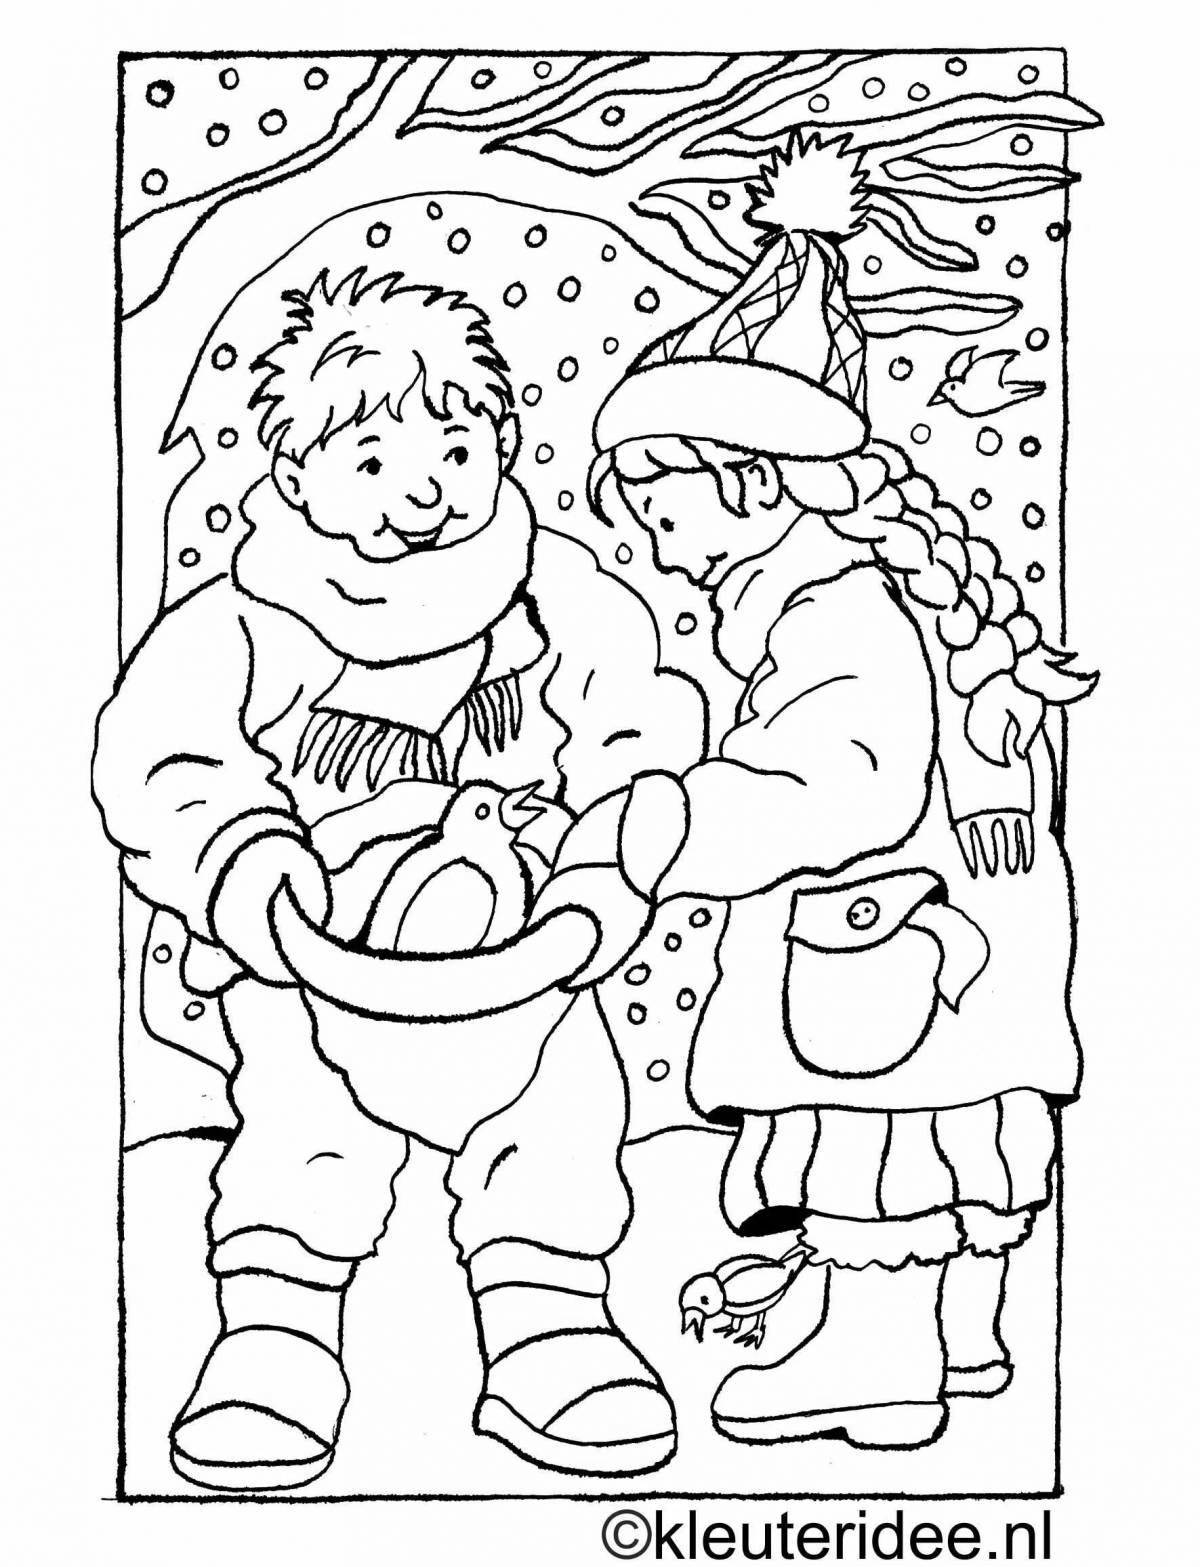 Rampant coloring of Christmas carols for children